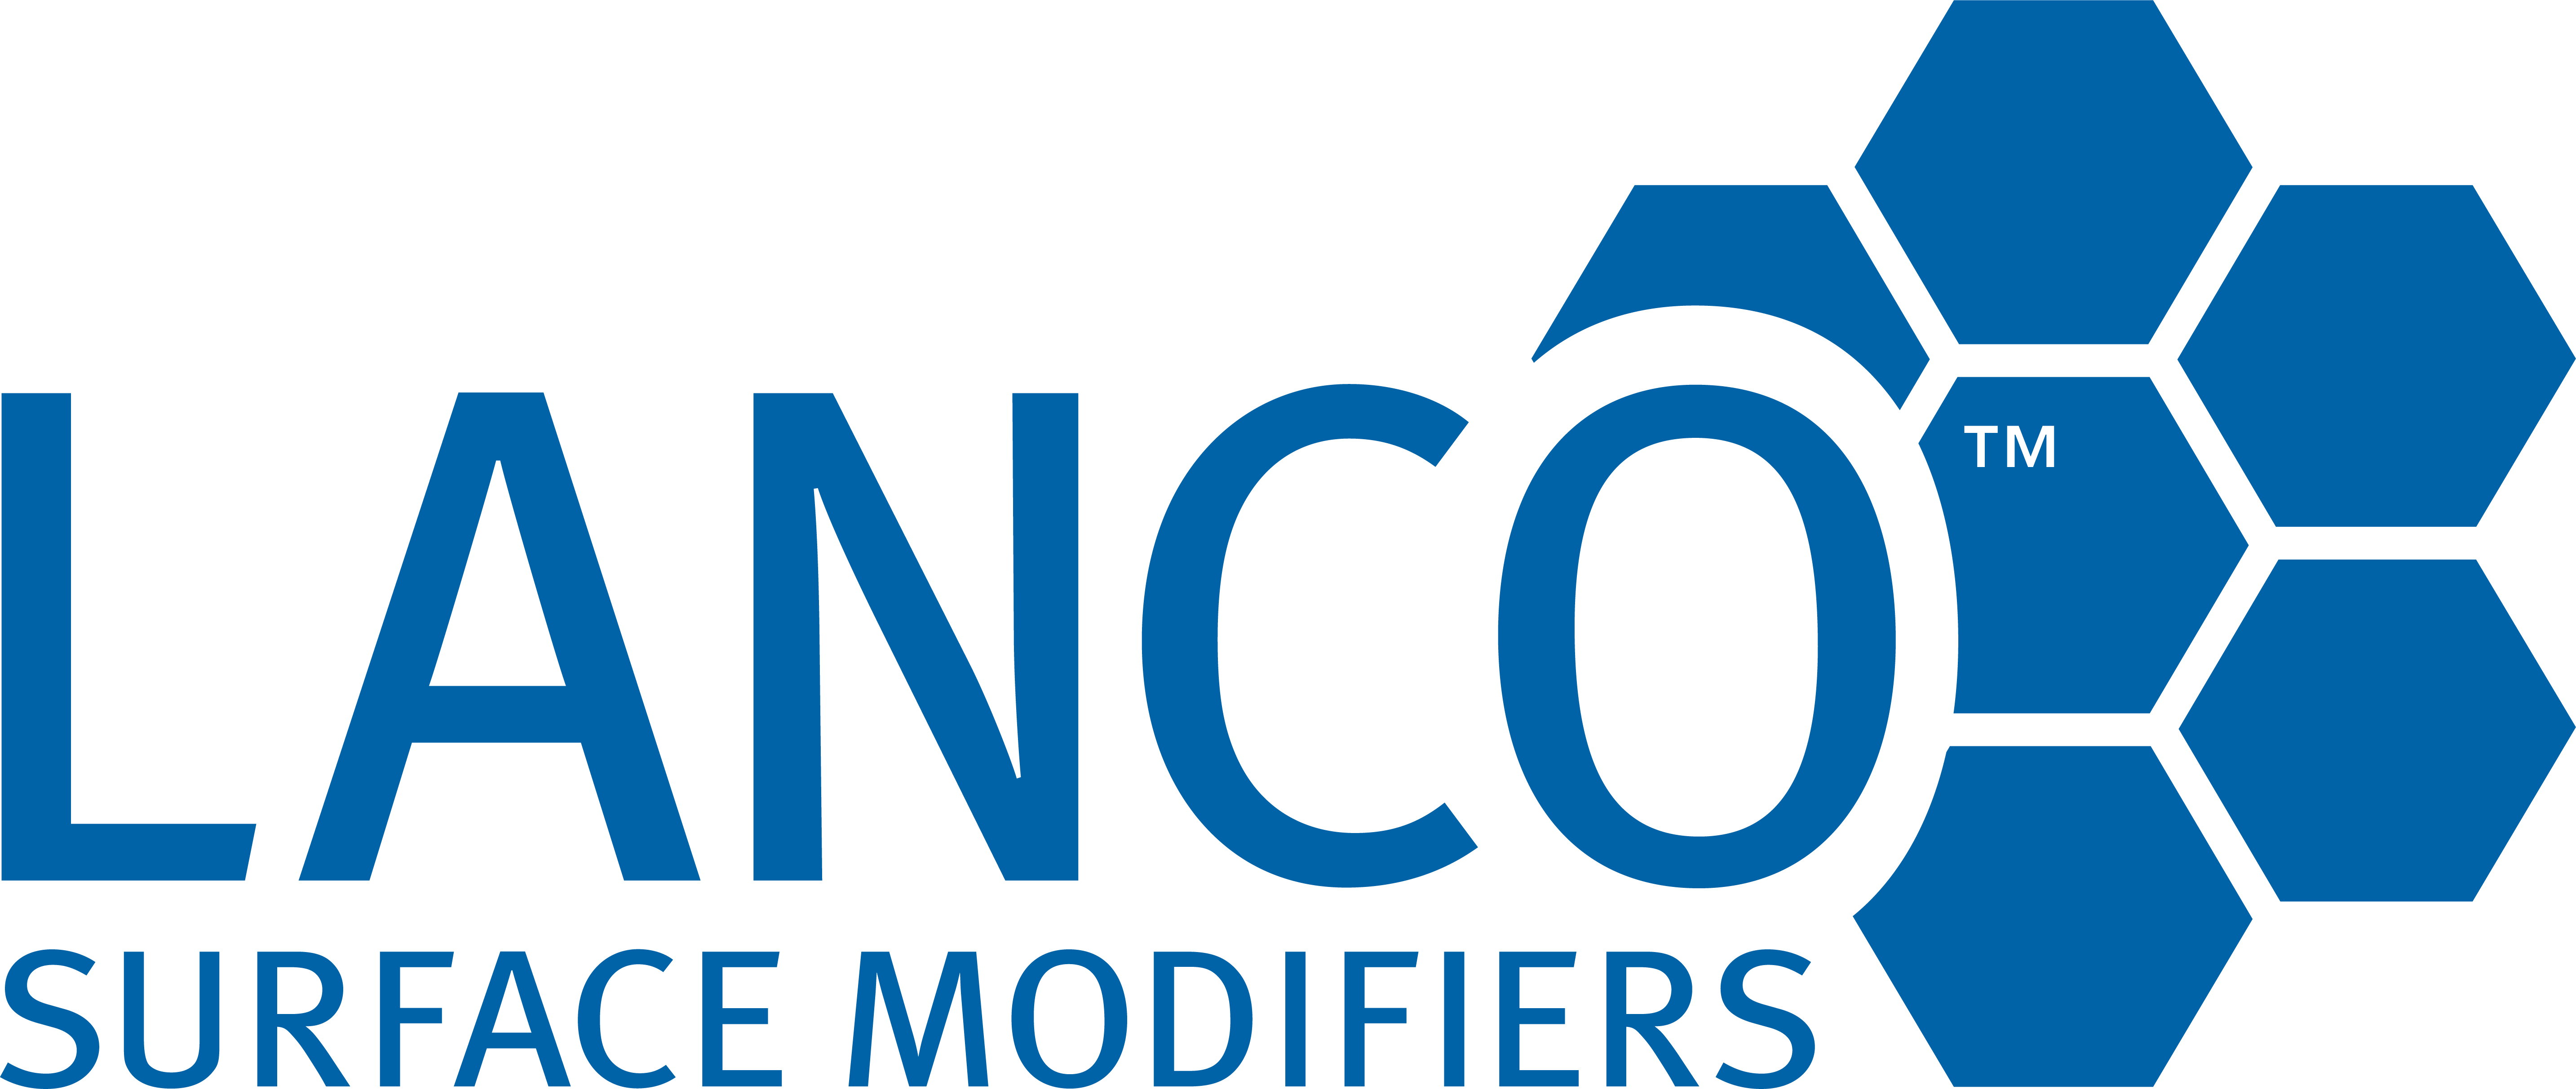 Lanco-Surface-Modifiers